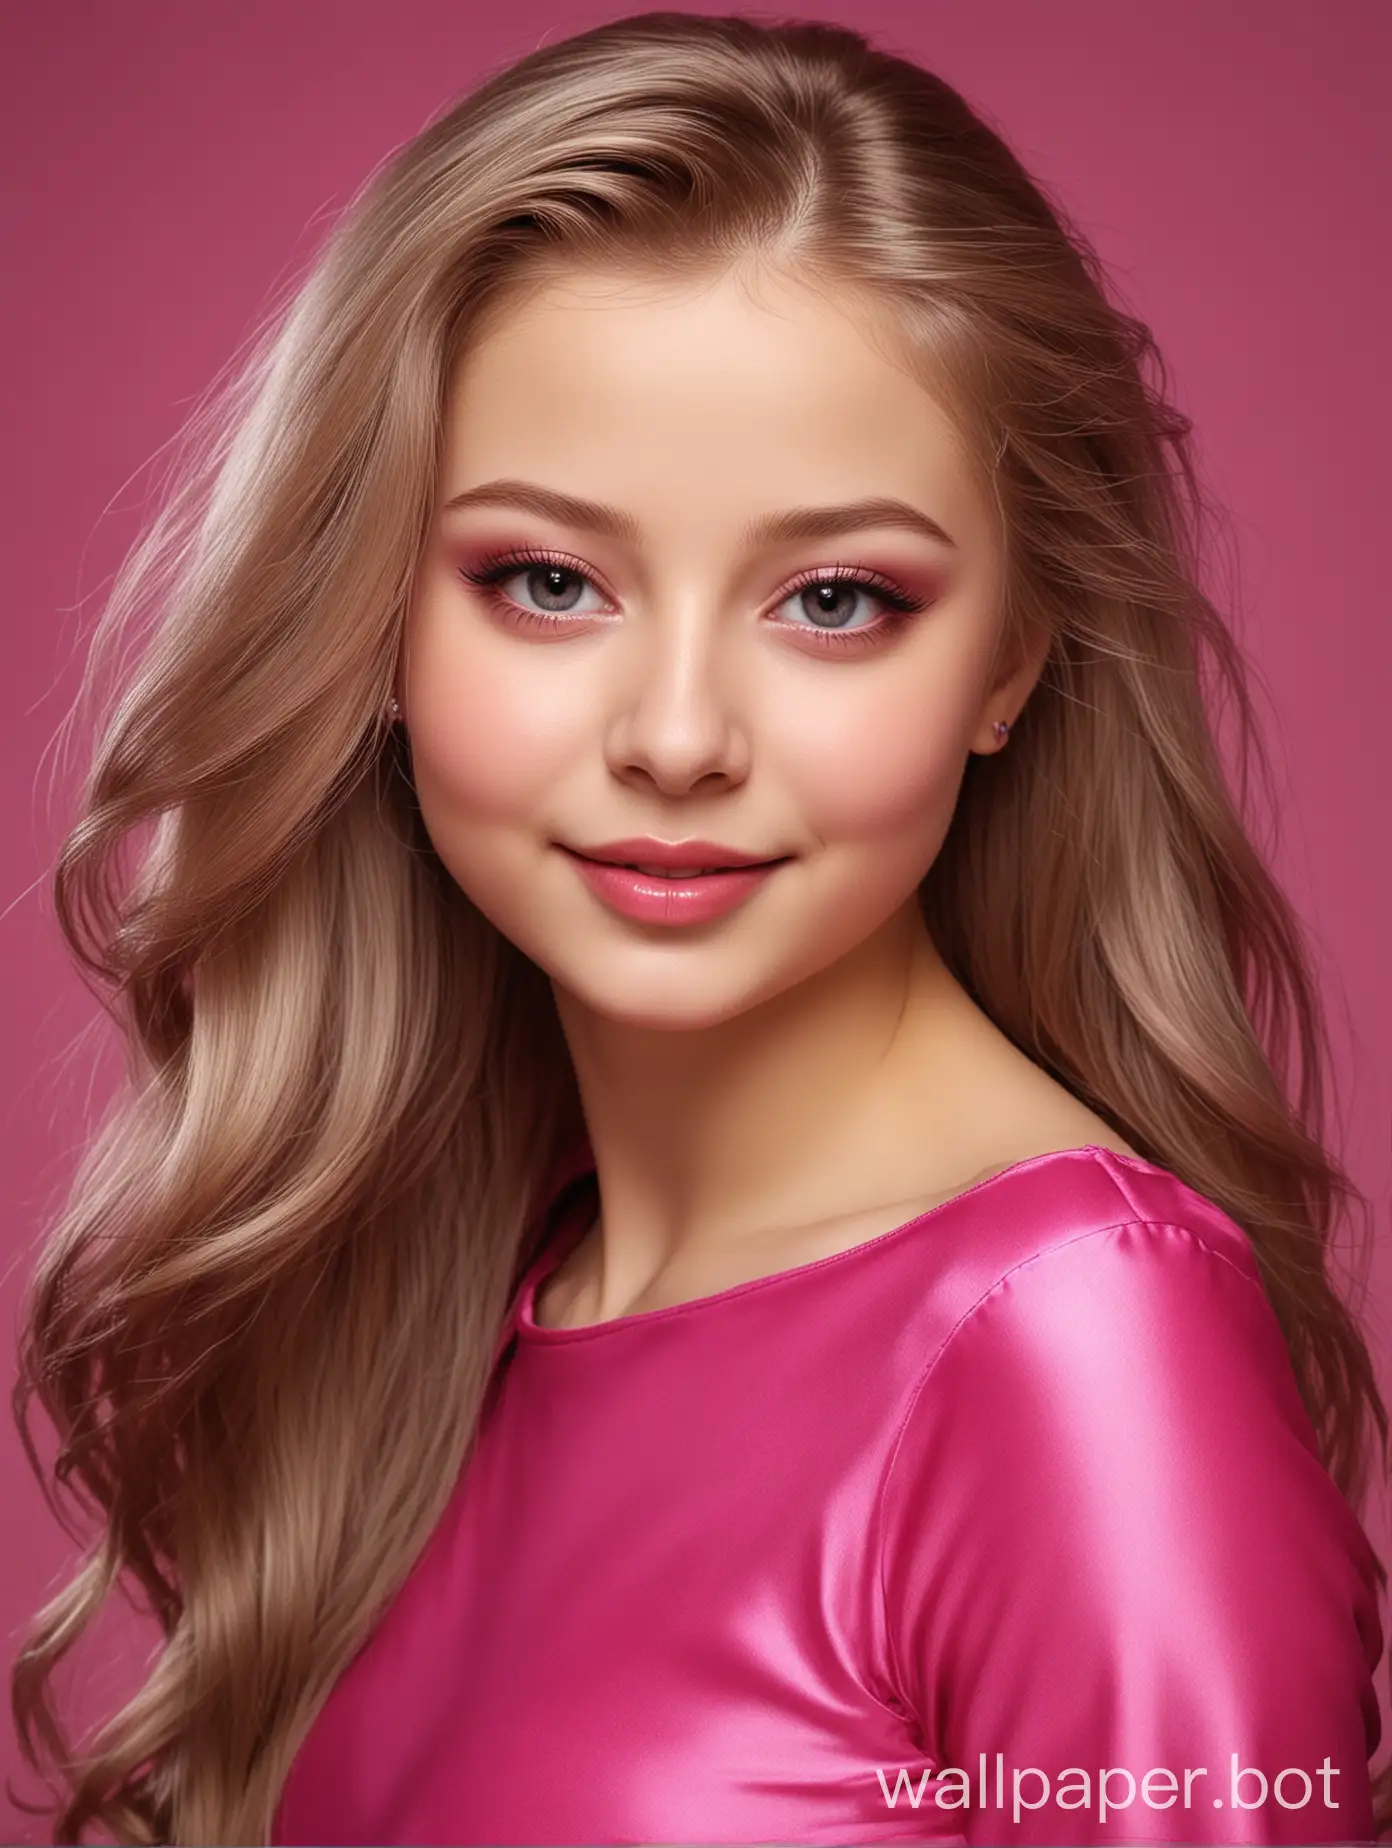 Realistic-Portrait-of-Yulia-Lipnitskaya-with-Long-Silky-Pink-Fuchsia-Hair-Smiling